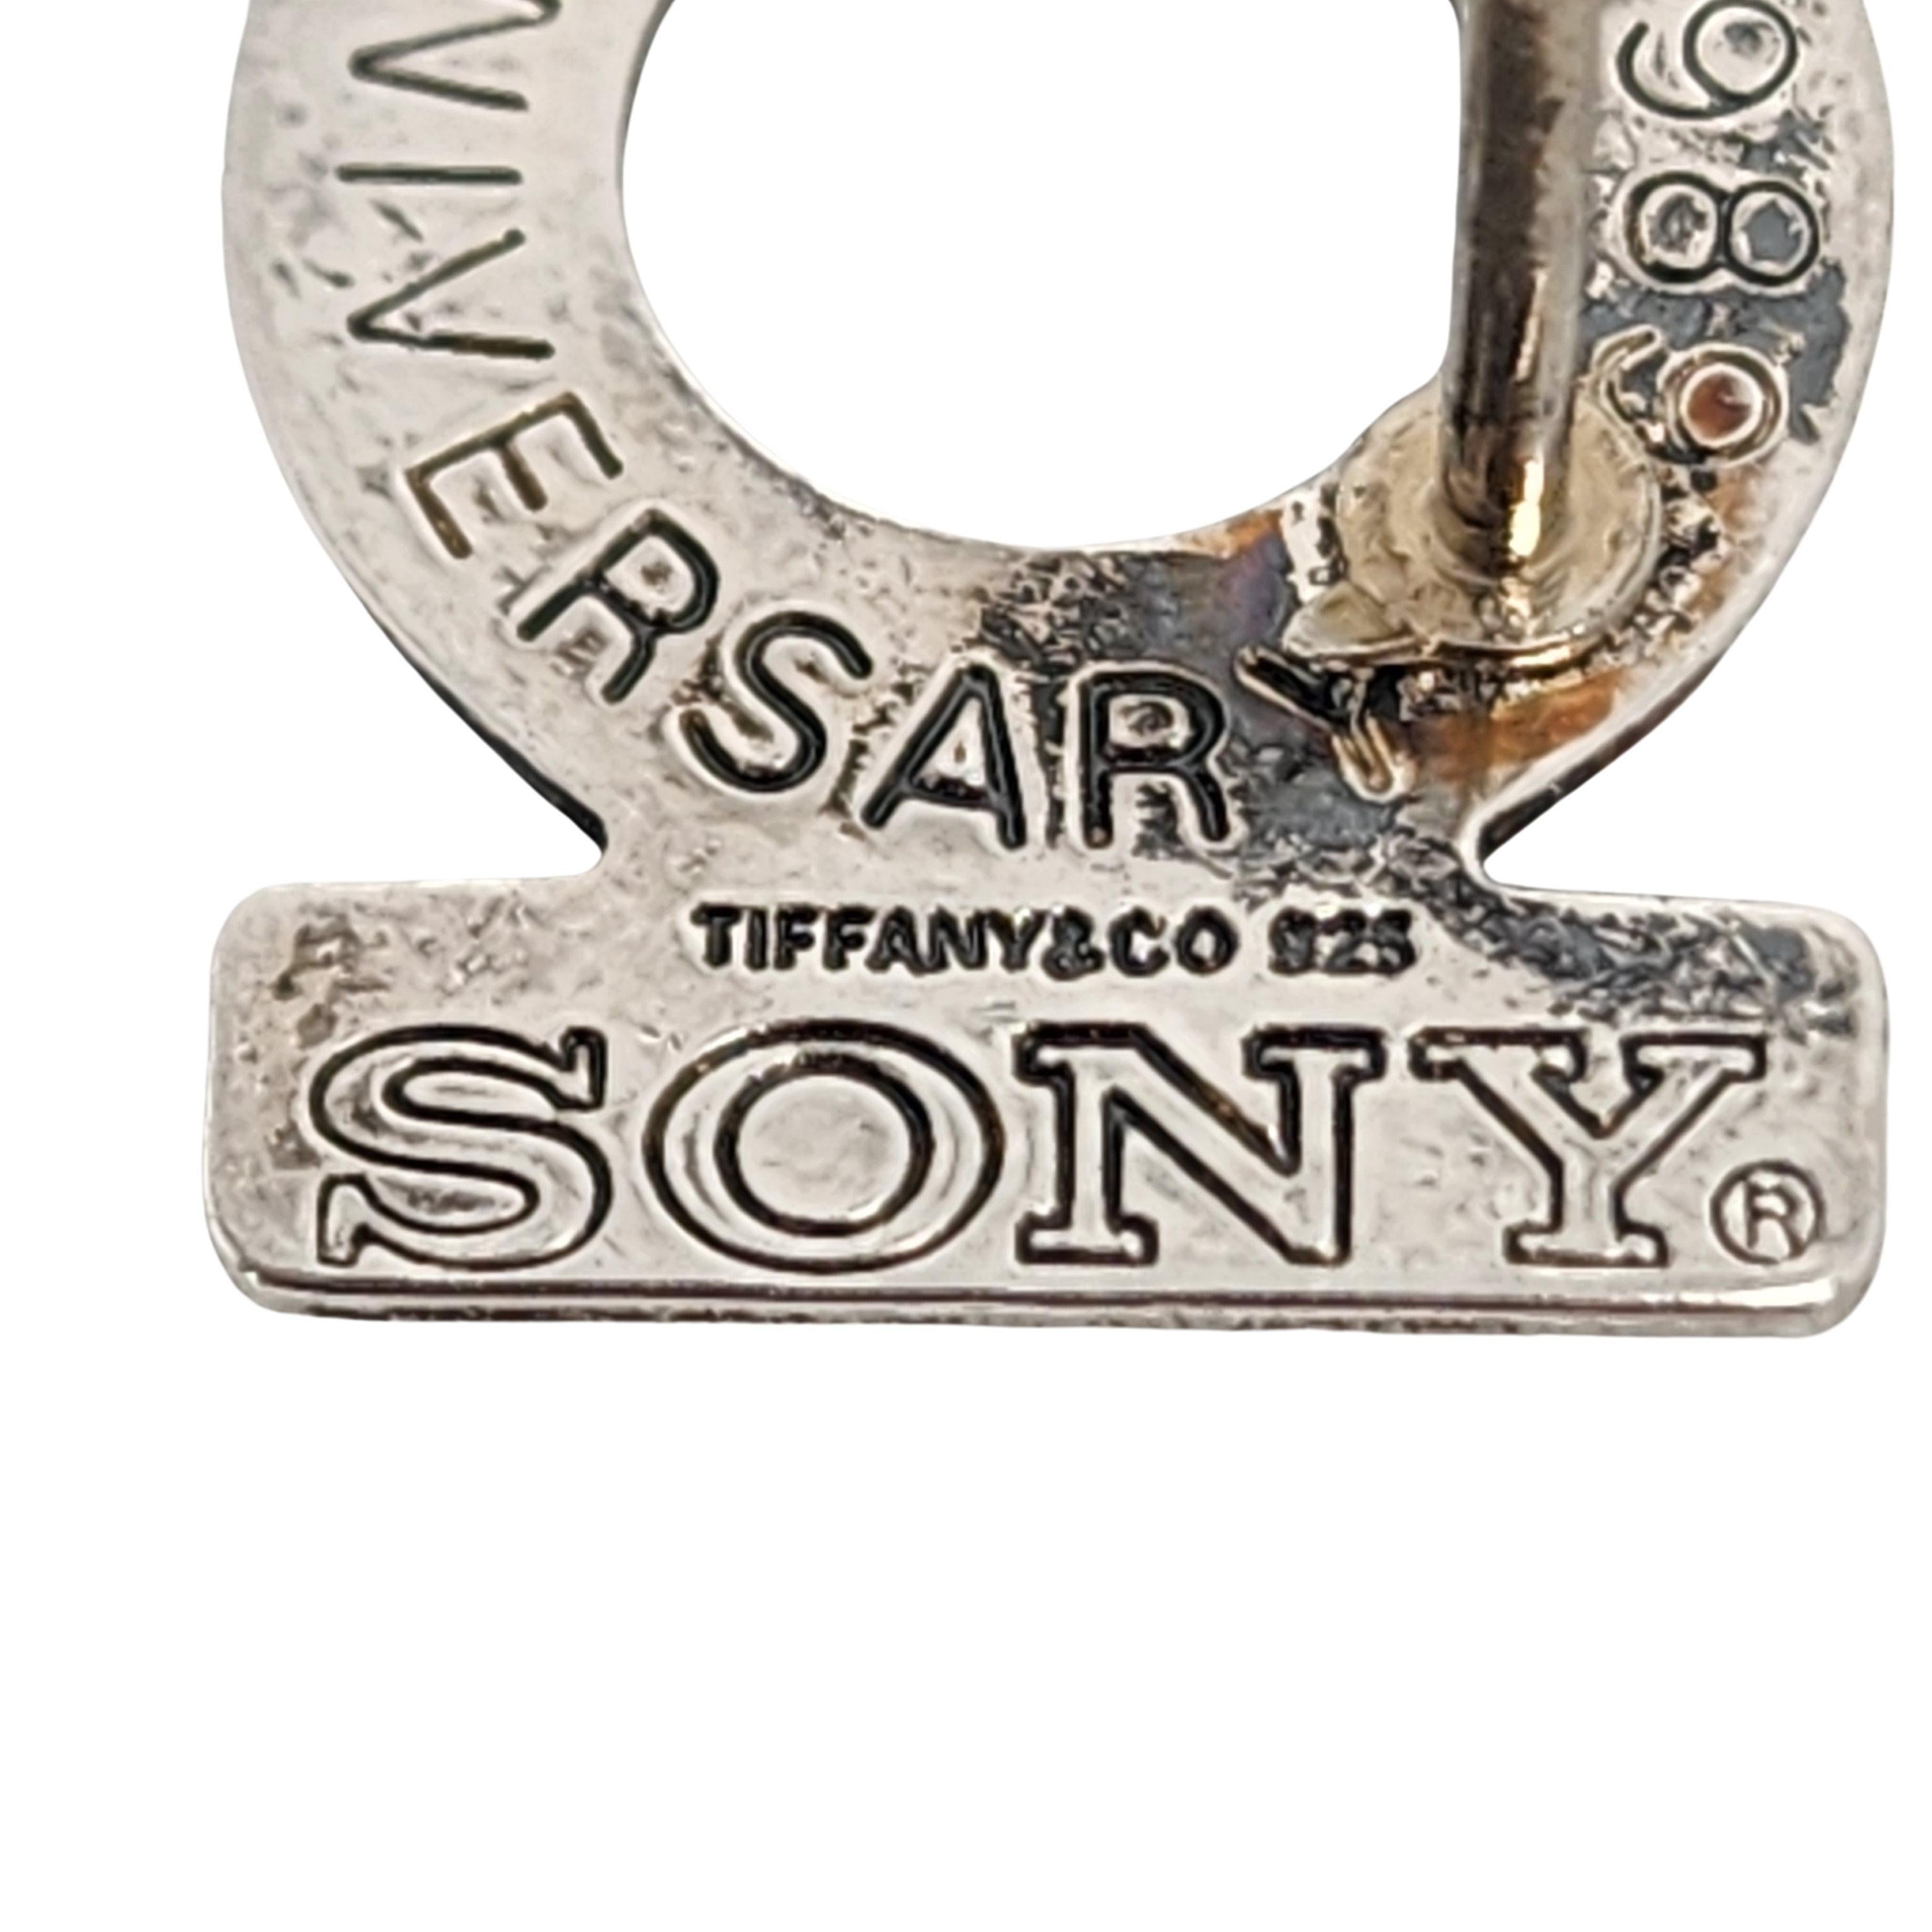 Tiffany & Co Sterling Silver Sony Walkman 10th Anniversary Tie Tack Pin #15853 1